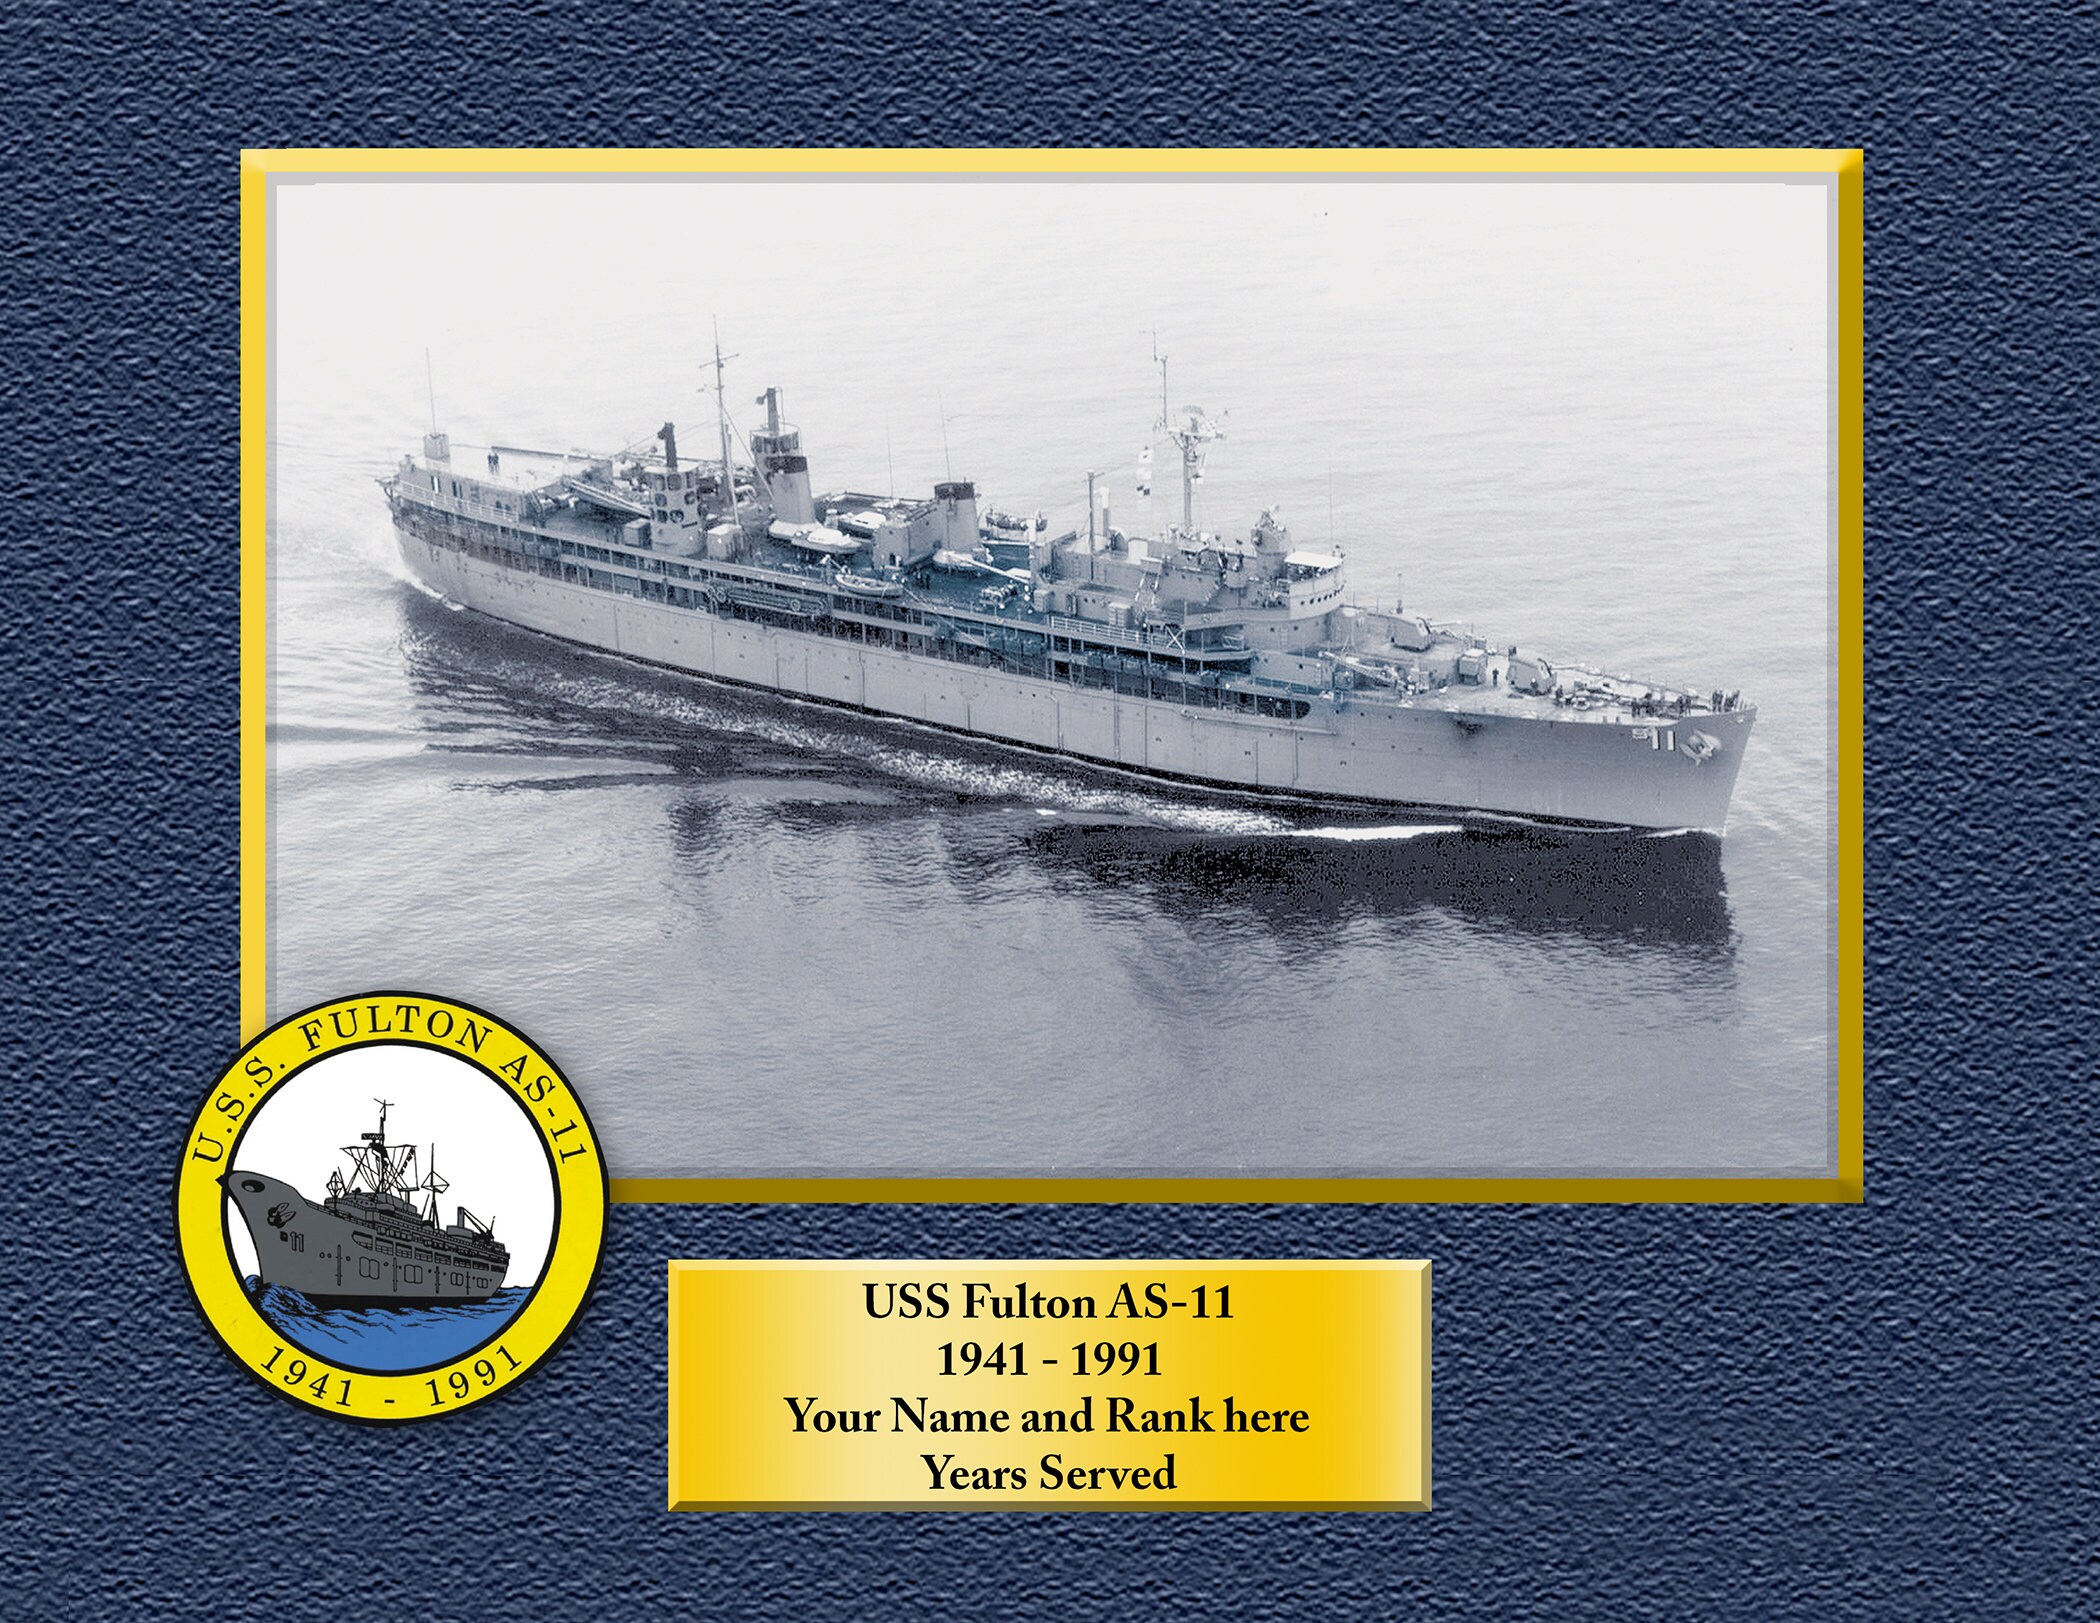 USS Fulton AS 11 Personalized Canvas Ship Photo Print Navy Veteran Gift